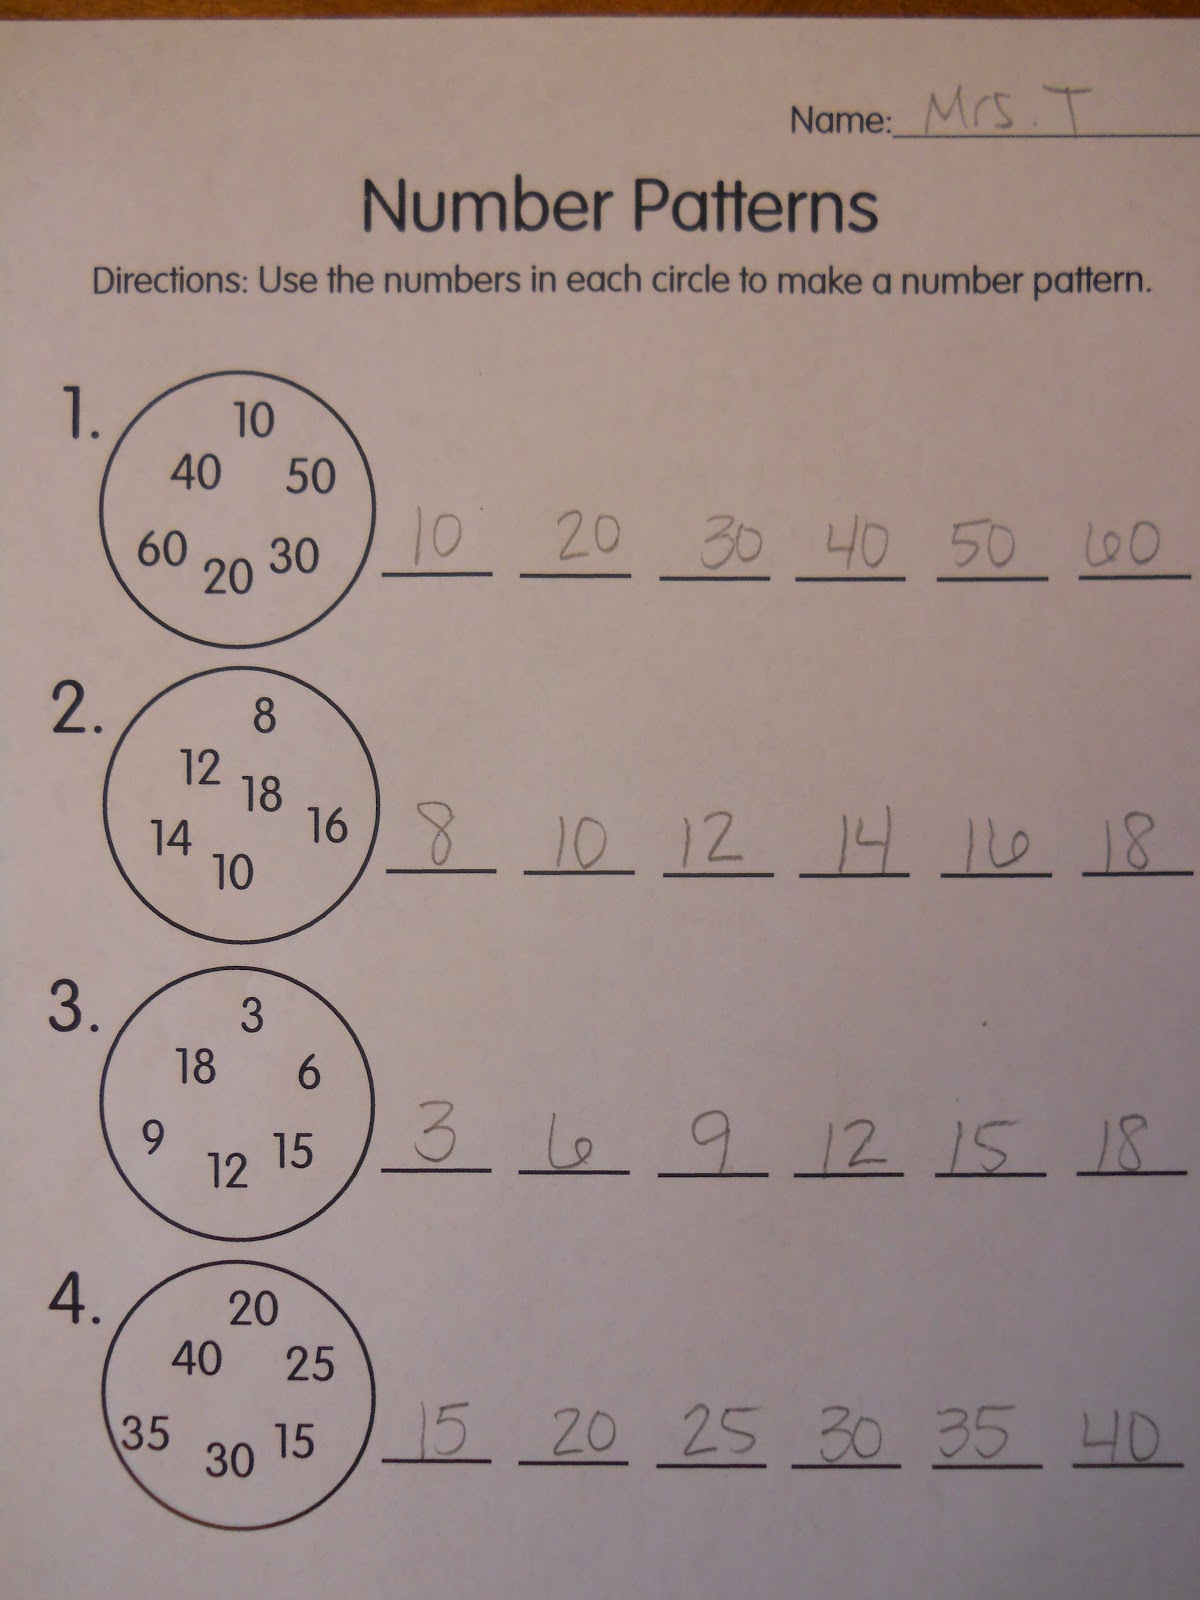 mrs-t-s-first-grade-class-number-patterns